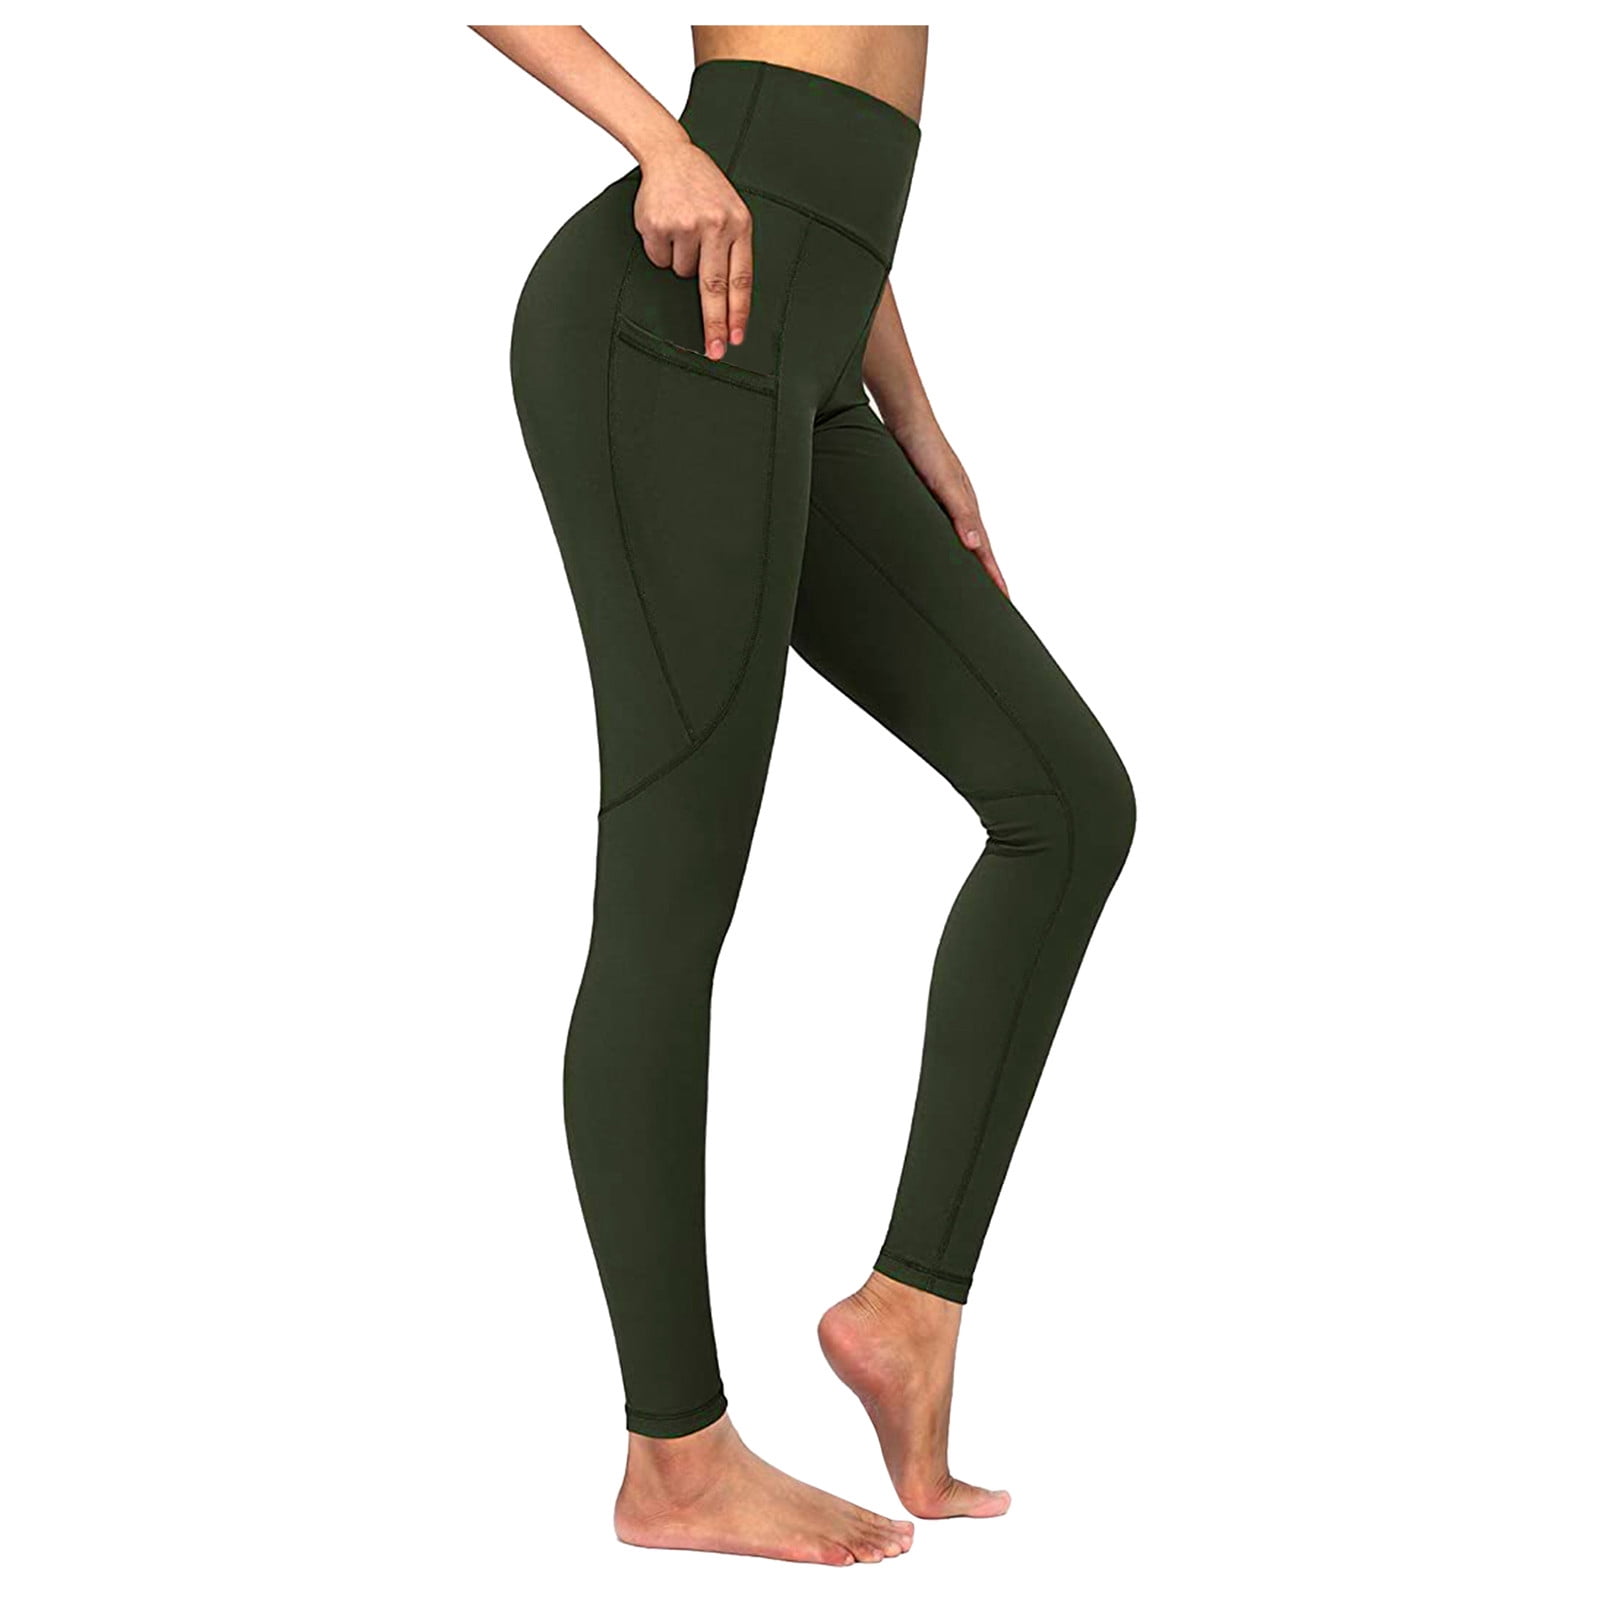 JDEFEG Pants Women Petite Yoga Women's Fashion Workout Leggings Fitness  Sports Gym Running Yoga Pants Womens Leggings with Pocket Polyester Green  Xl 